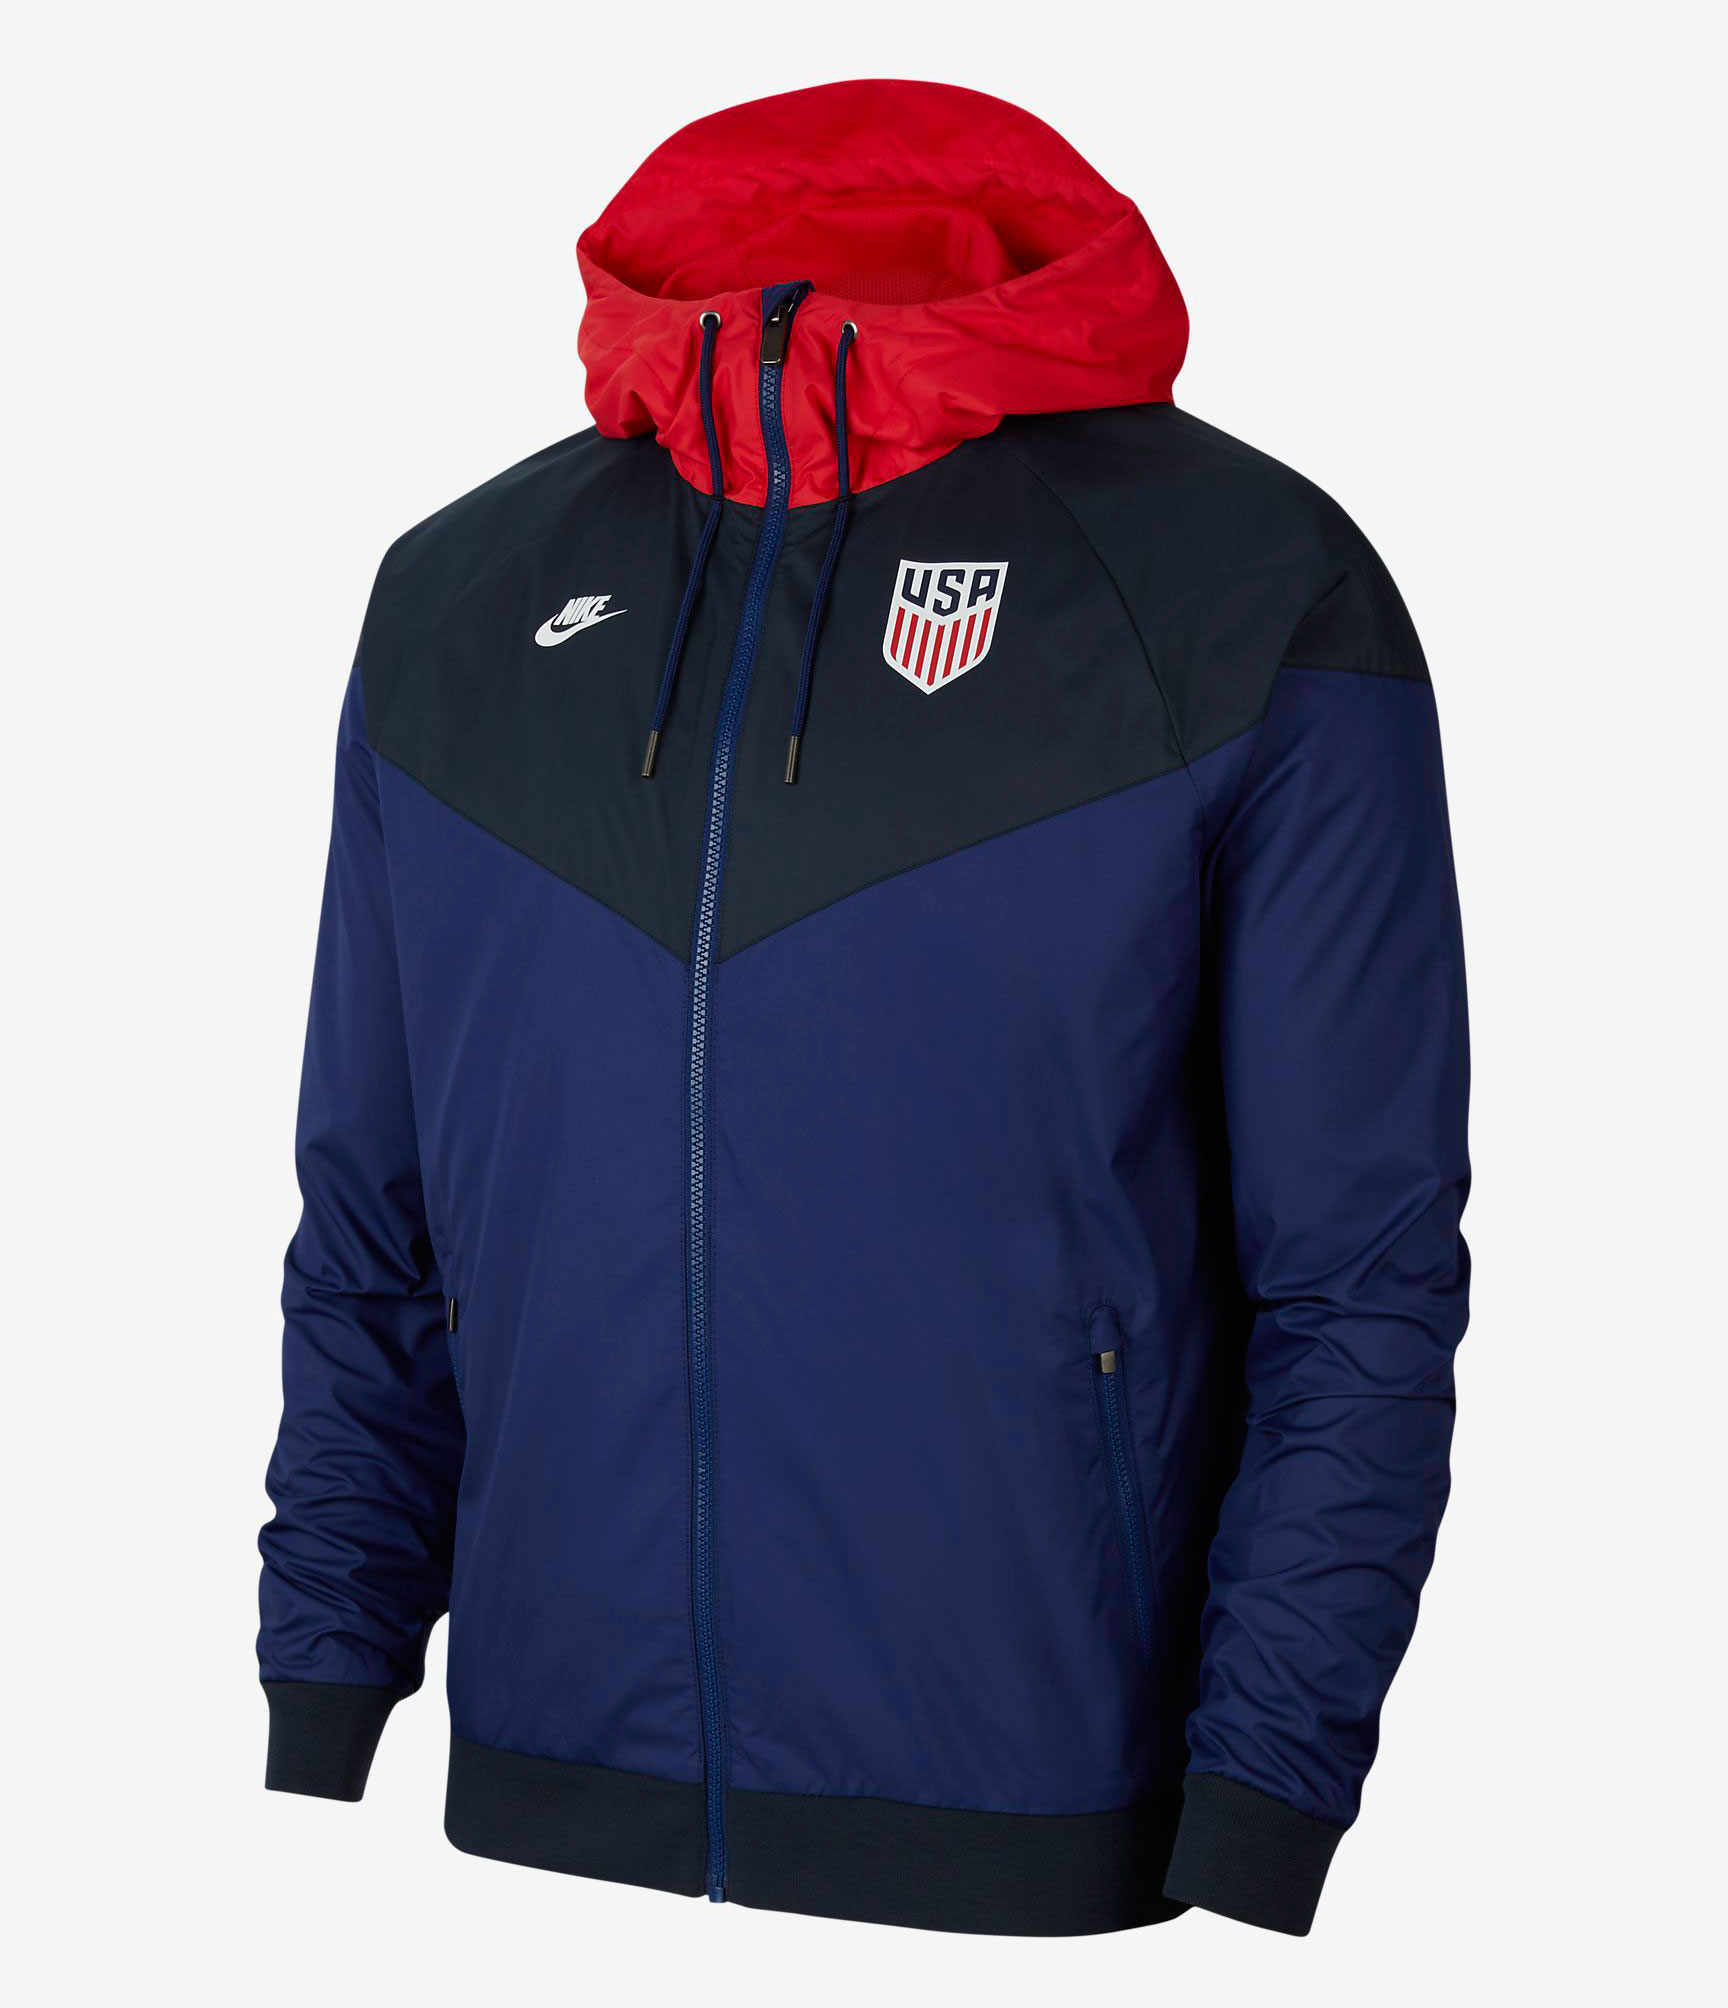 Nike Air Presto USA Navy Shirts Outfits | SneakerFits.com